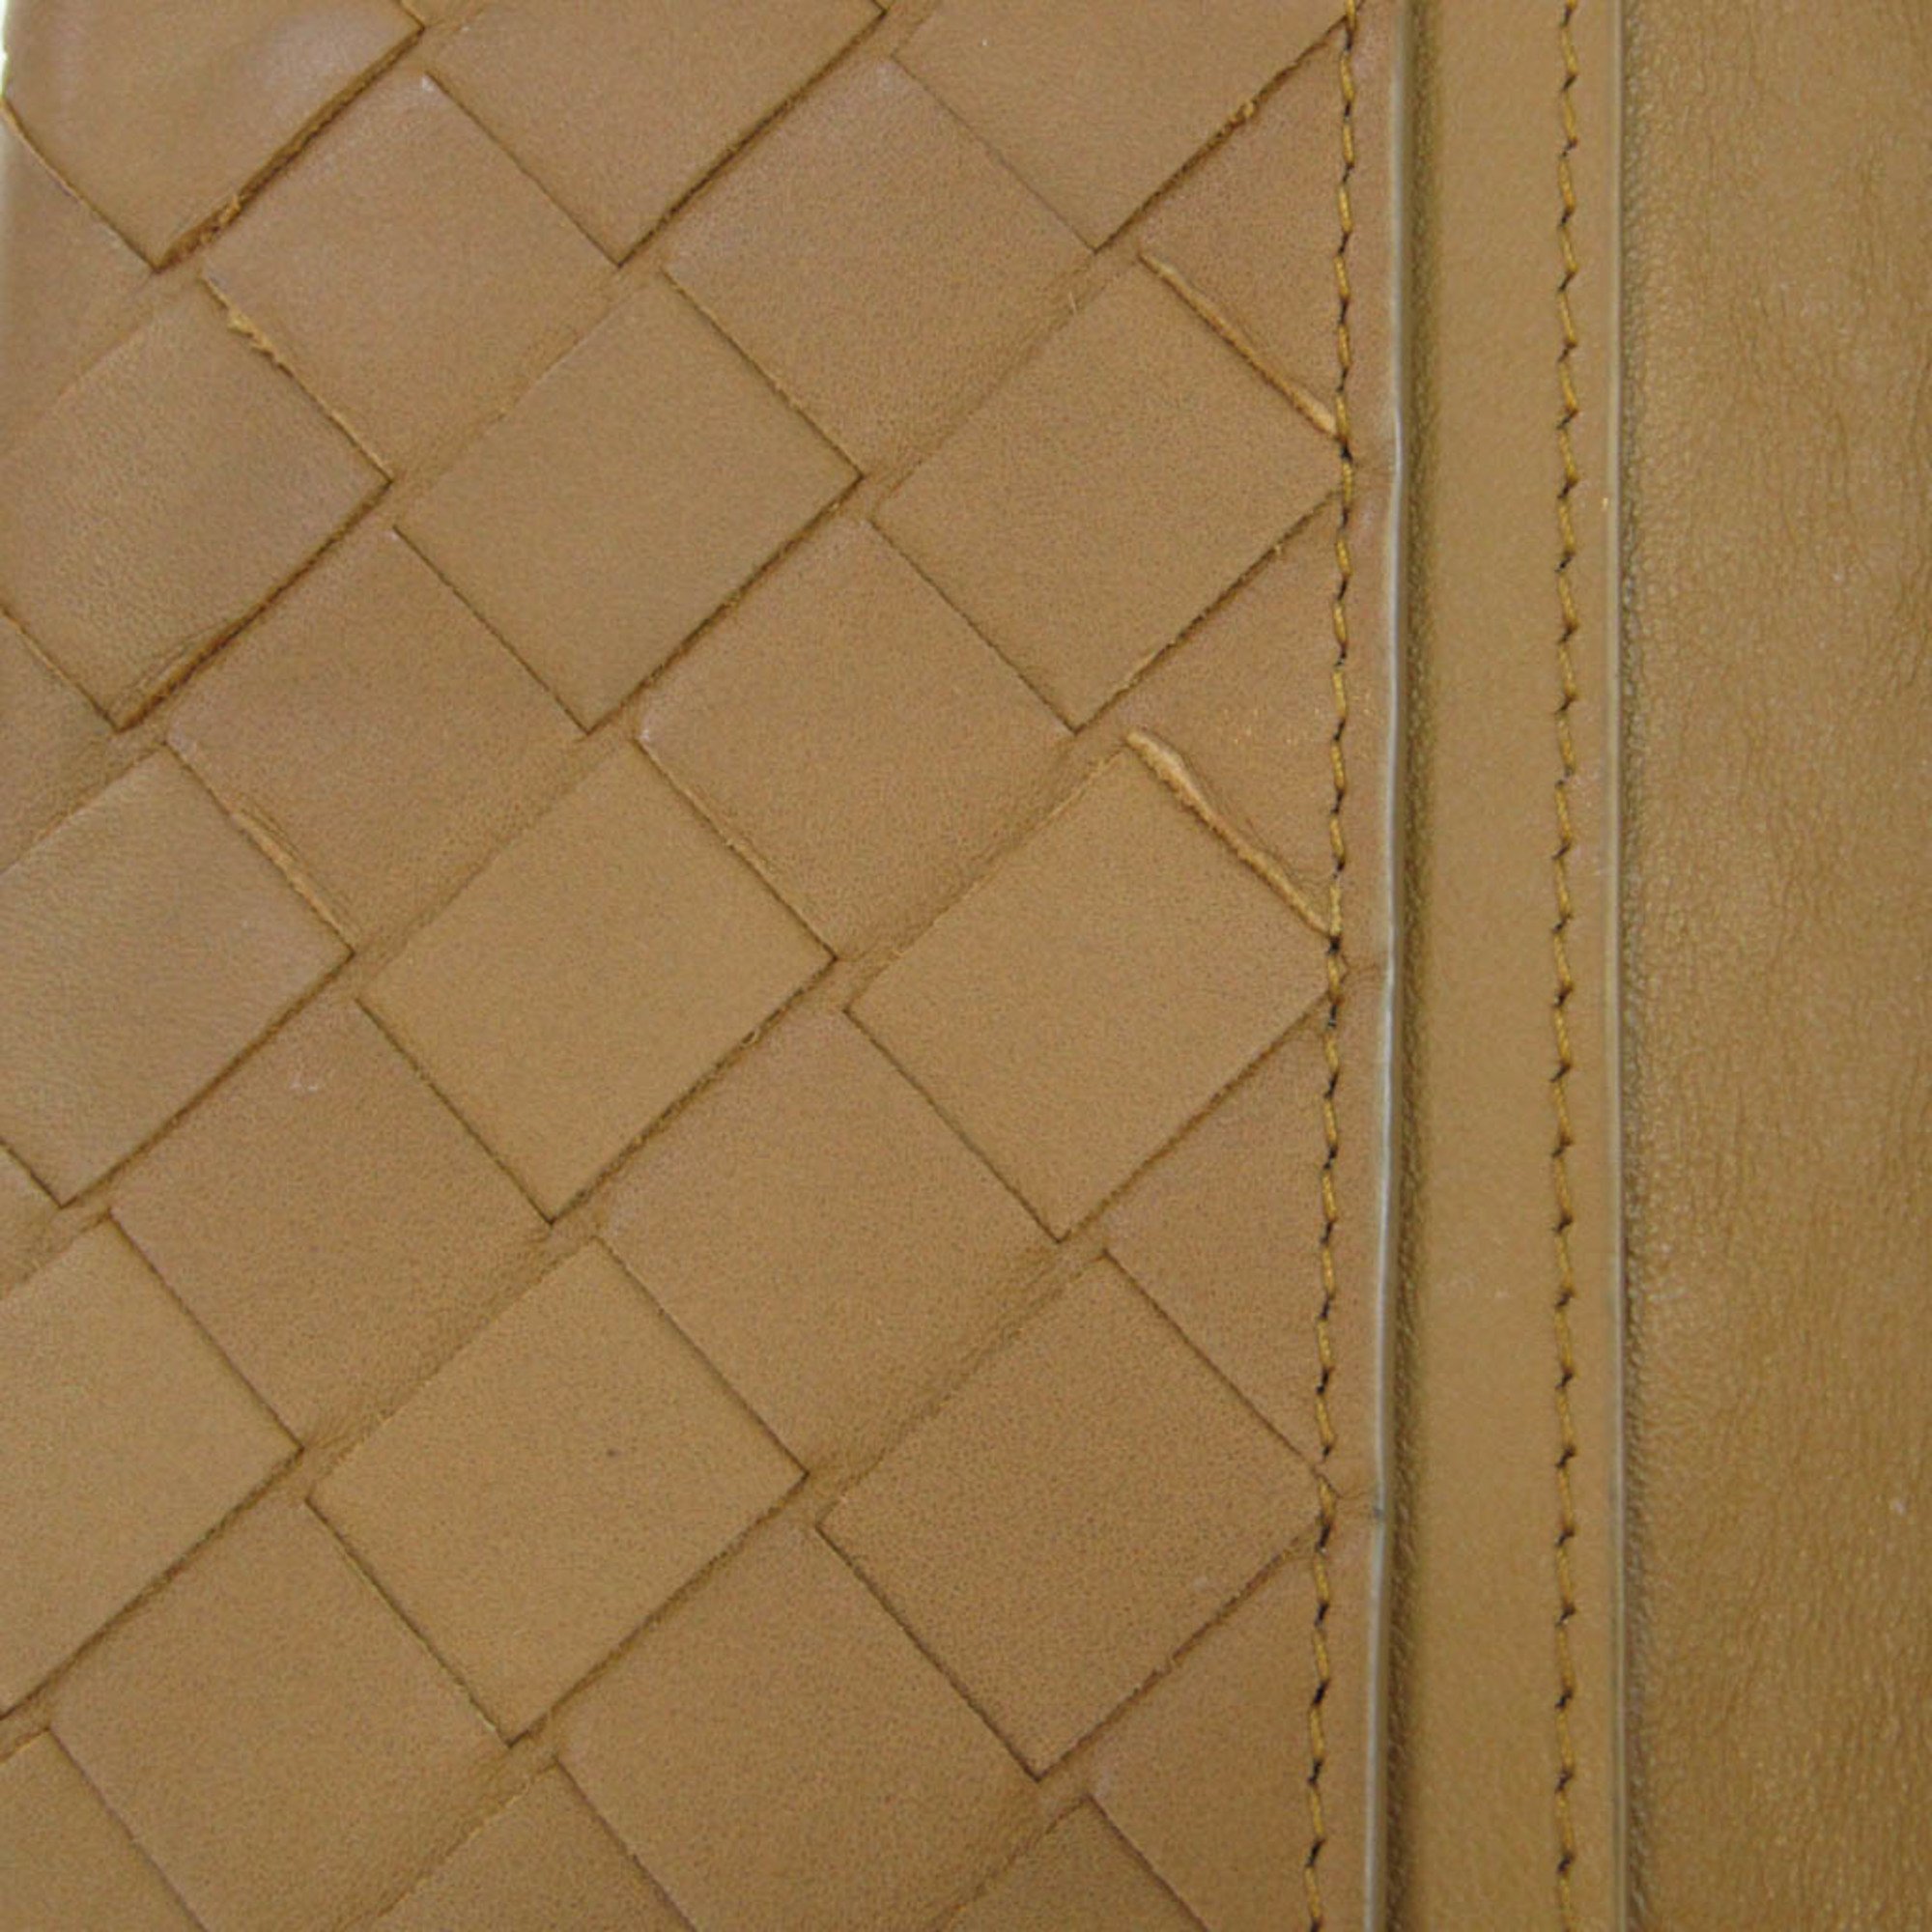 Bottega Veneta Intrecciato Women,Men Leather Long Wallet (tri-fold) Brown